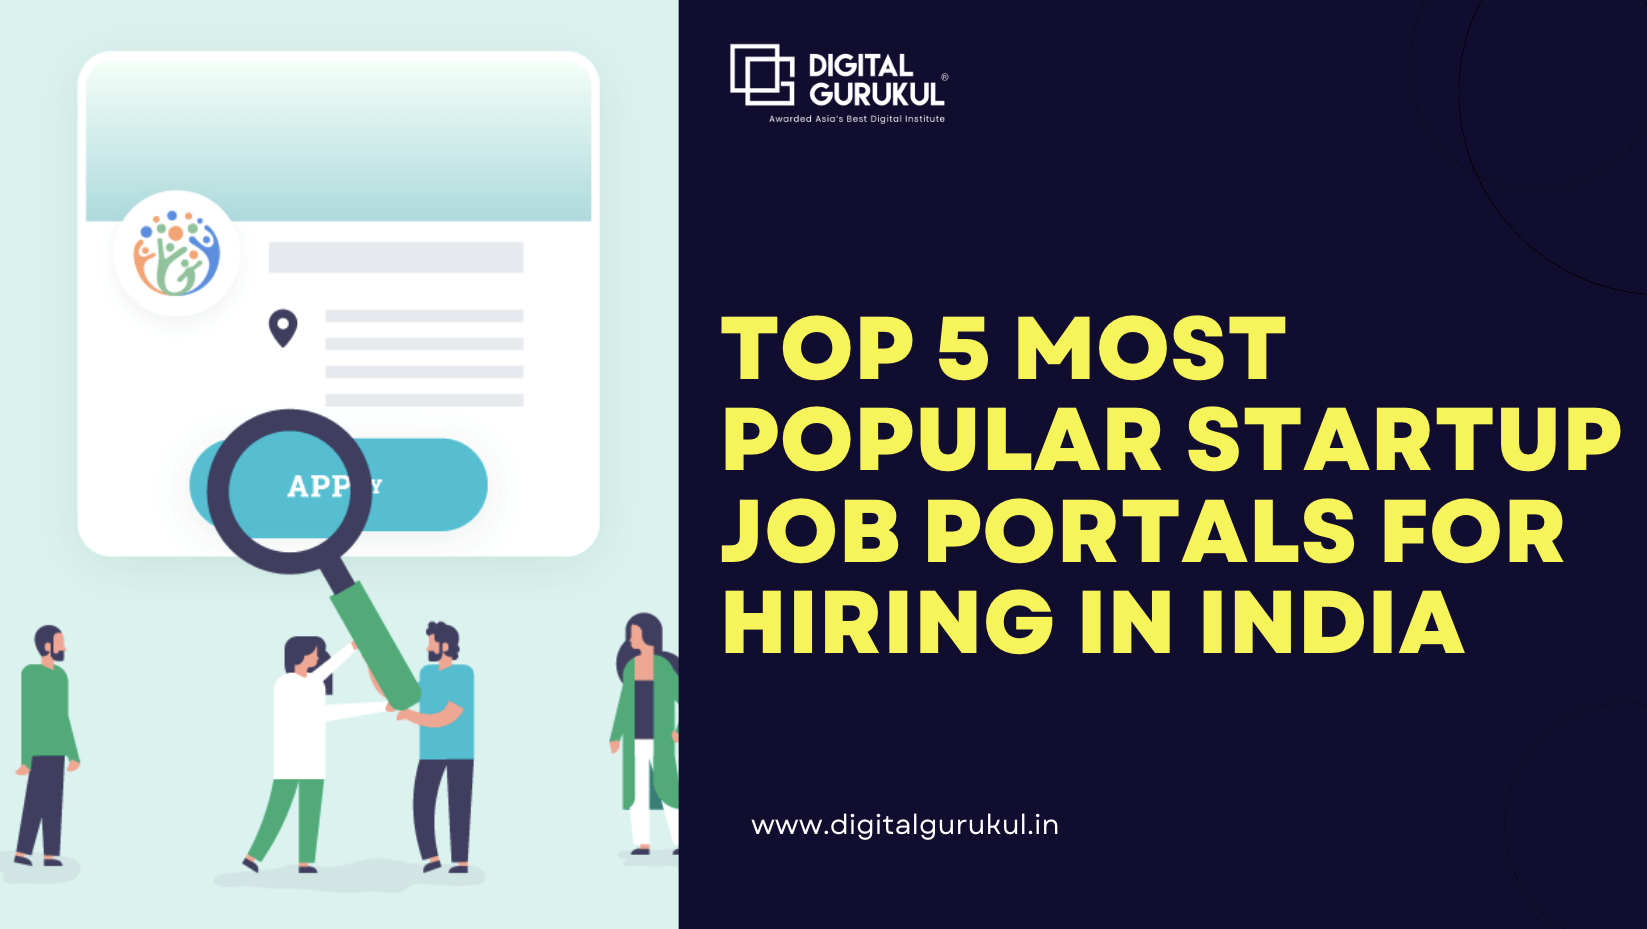 Top 5 most popular startup job portals for hiring in India